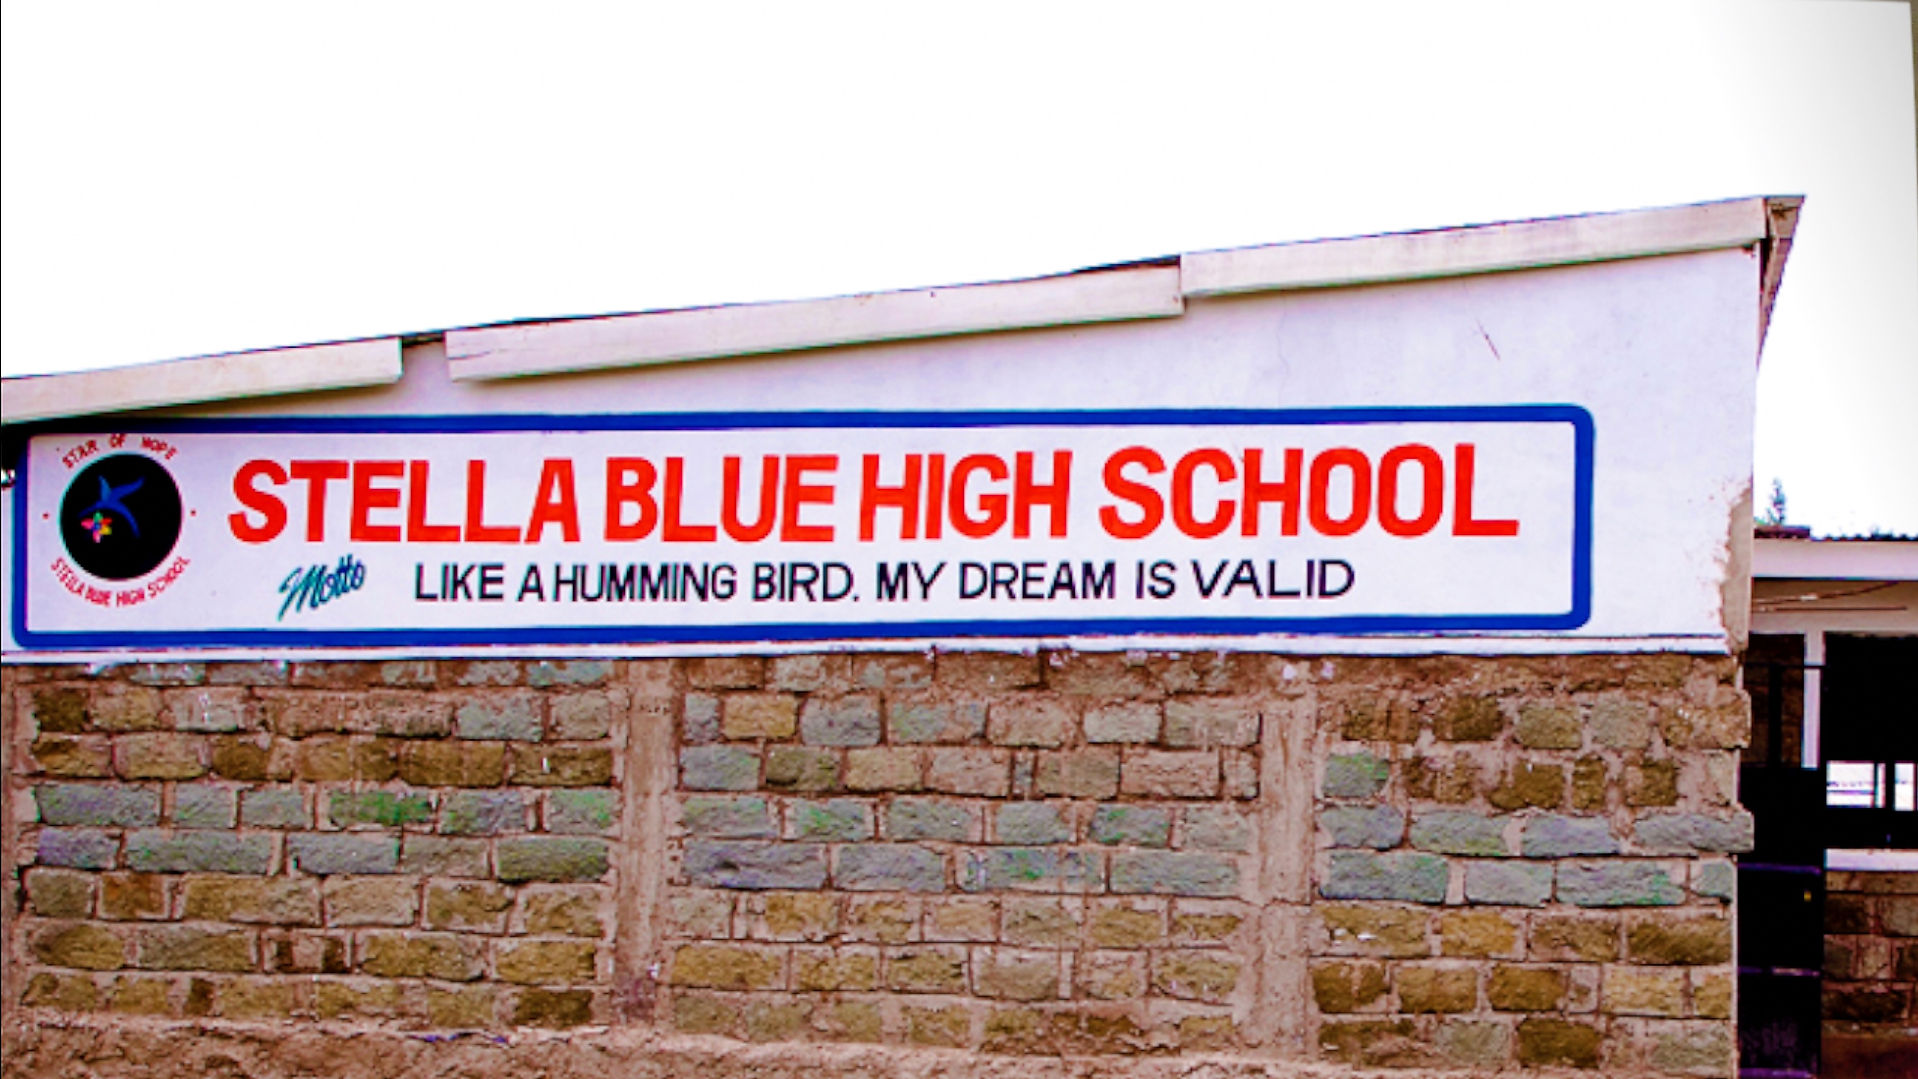 The story of Stella Blue High School